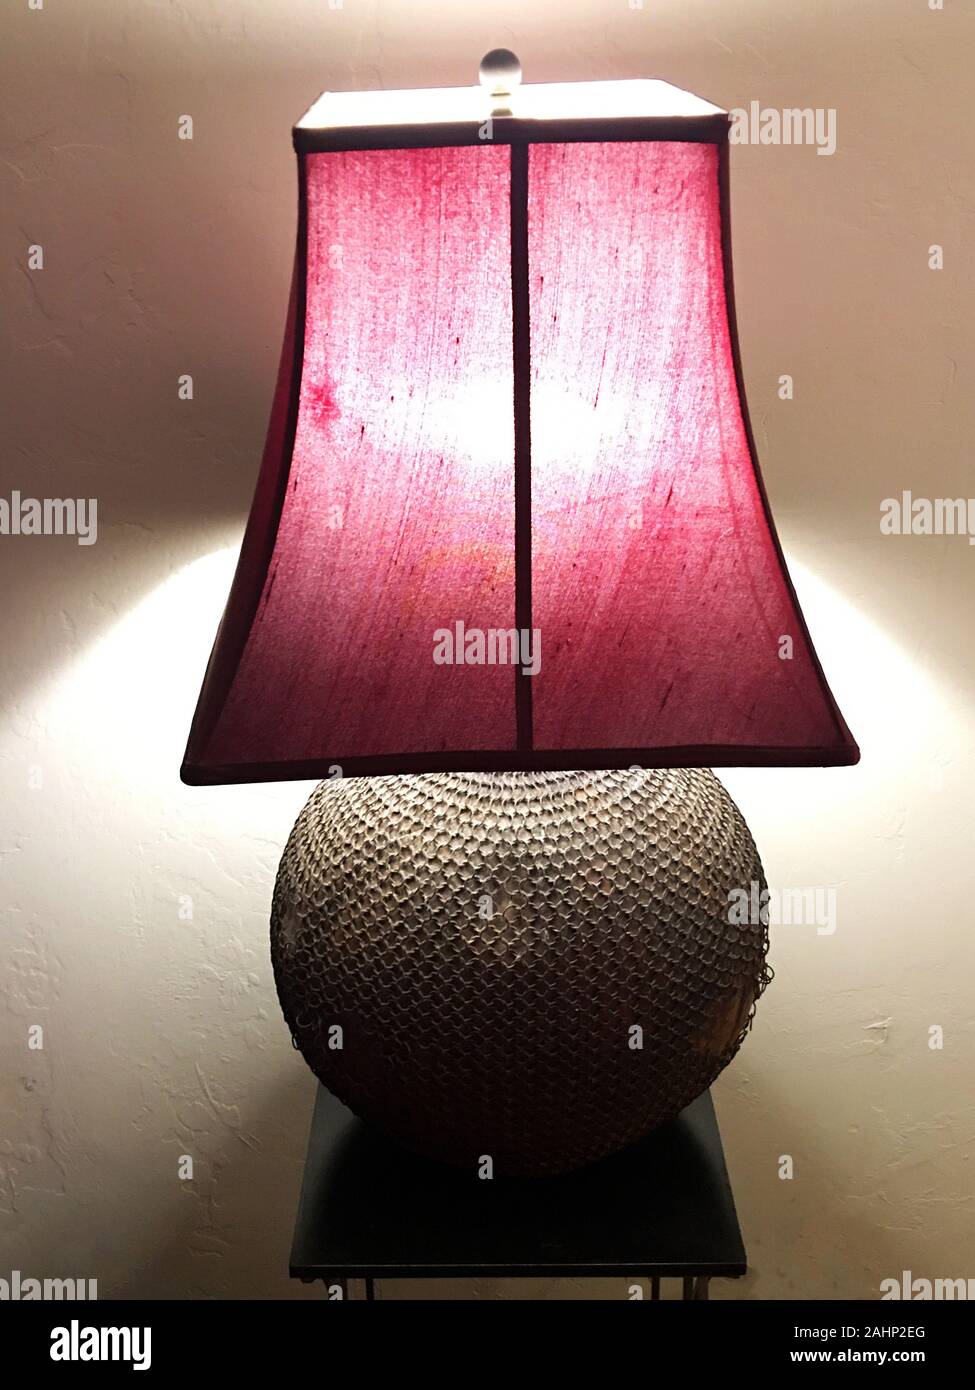 lounge table lamp